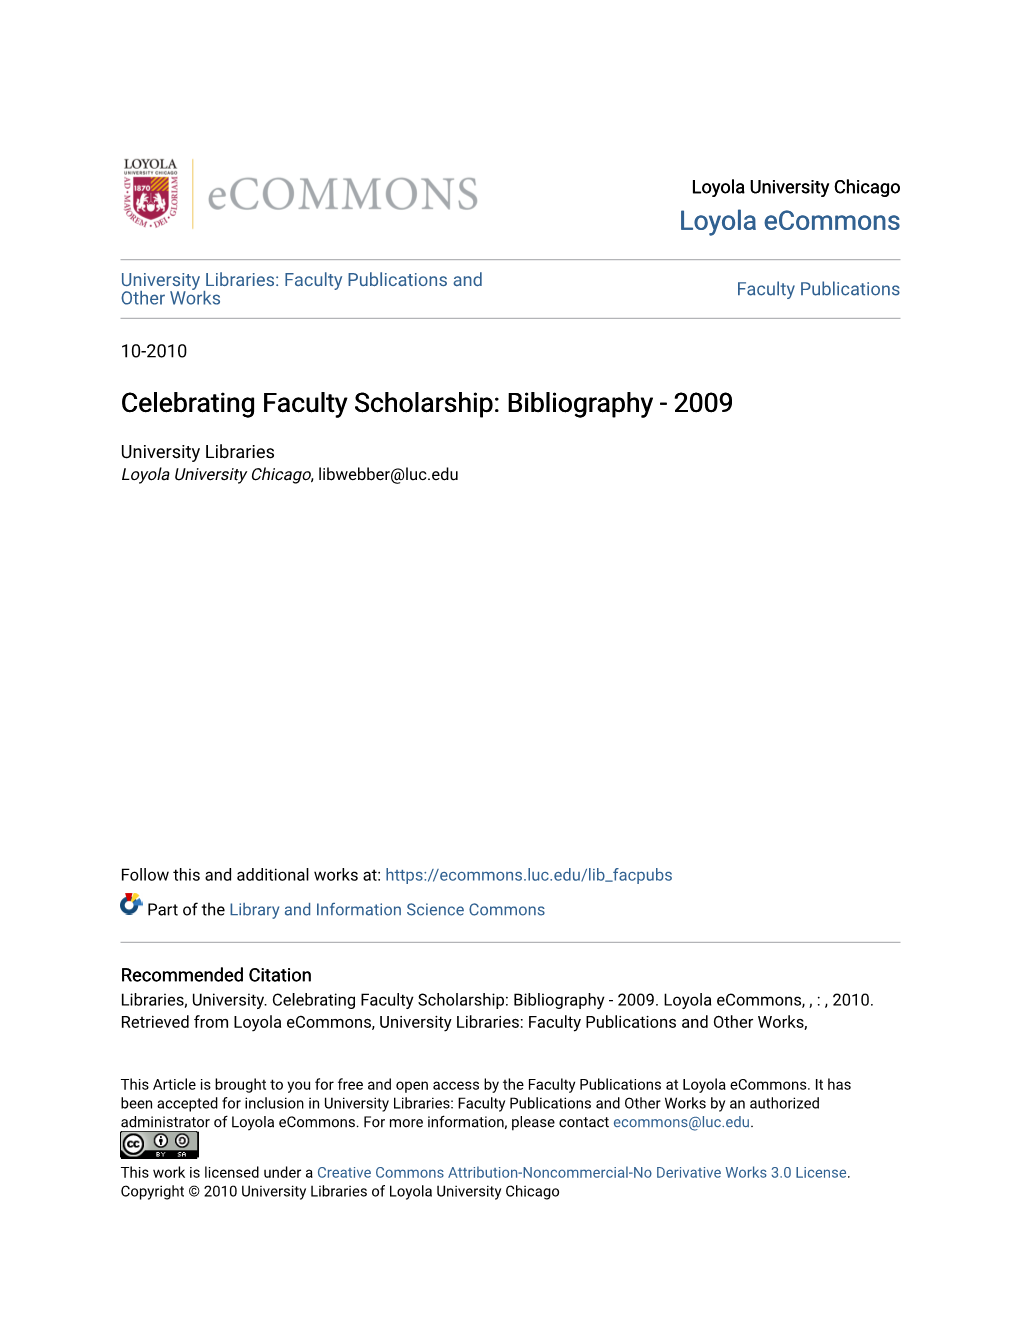 Celebrating Faculty Scholarship: Bibliography - 2009